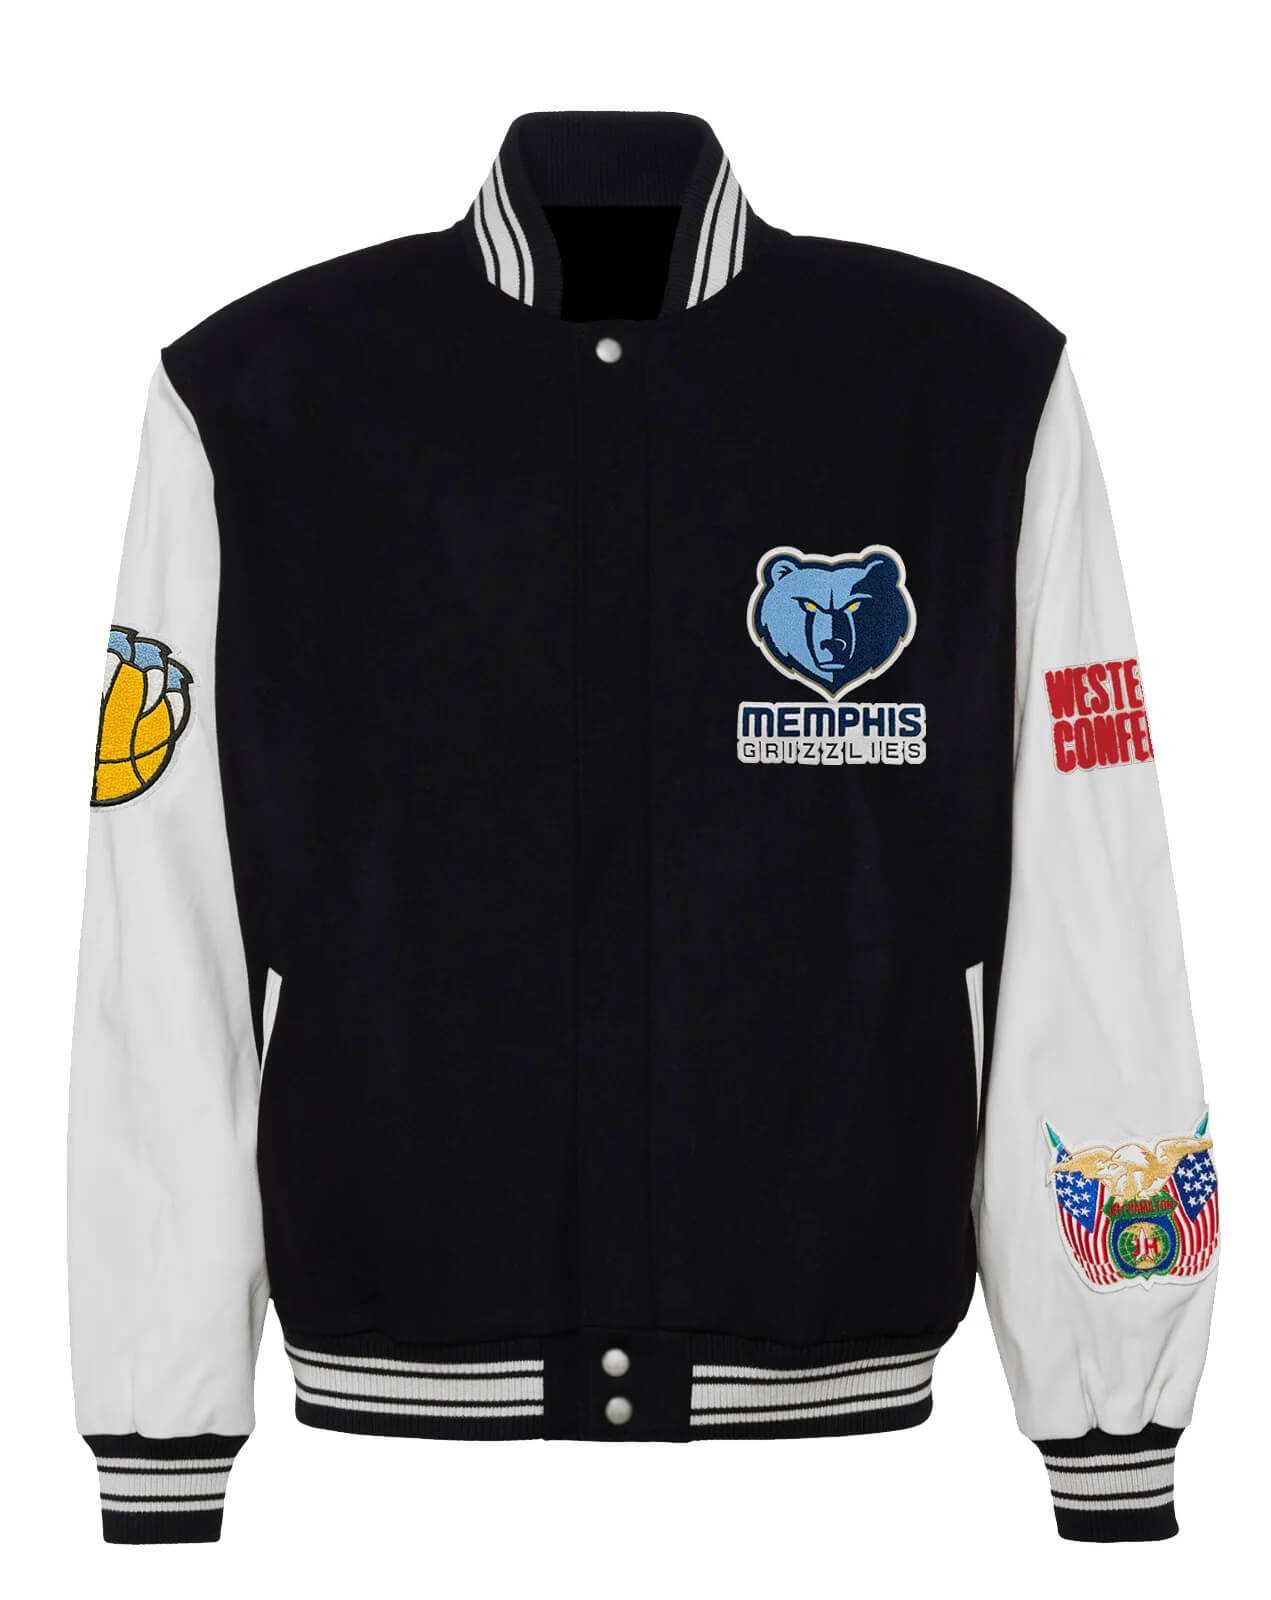 Memphis Grizzlies Archives Jacket Maker - of